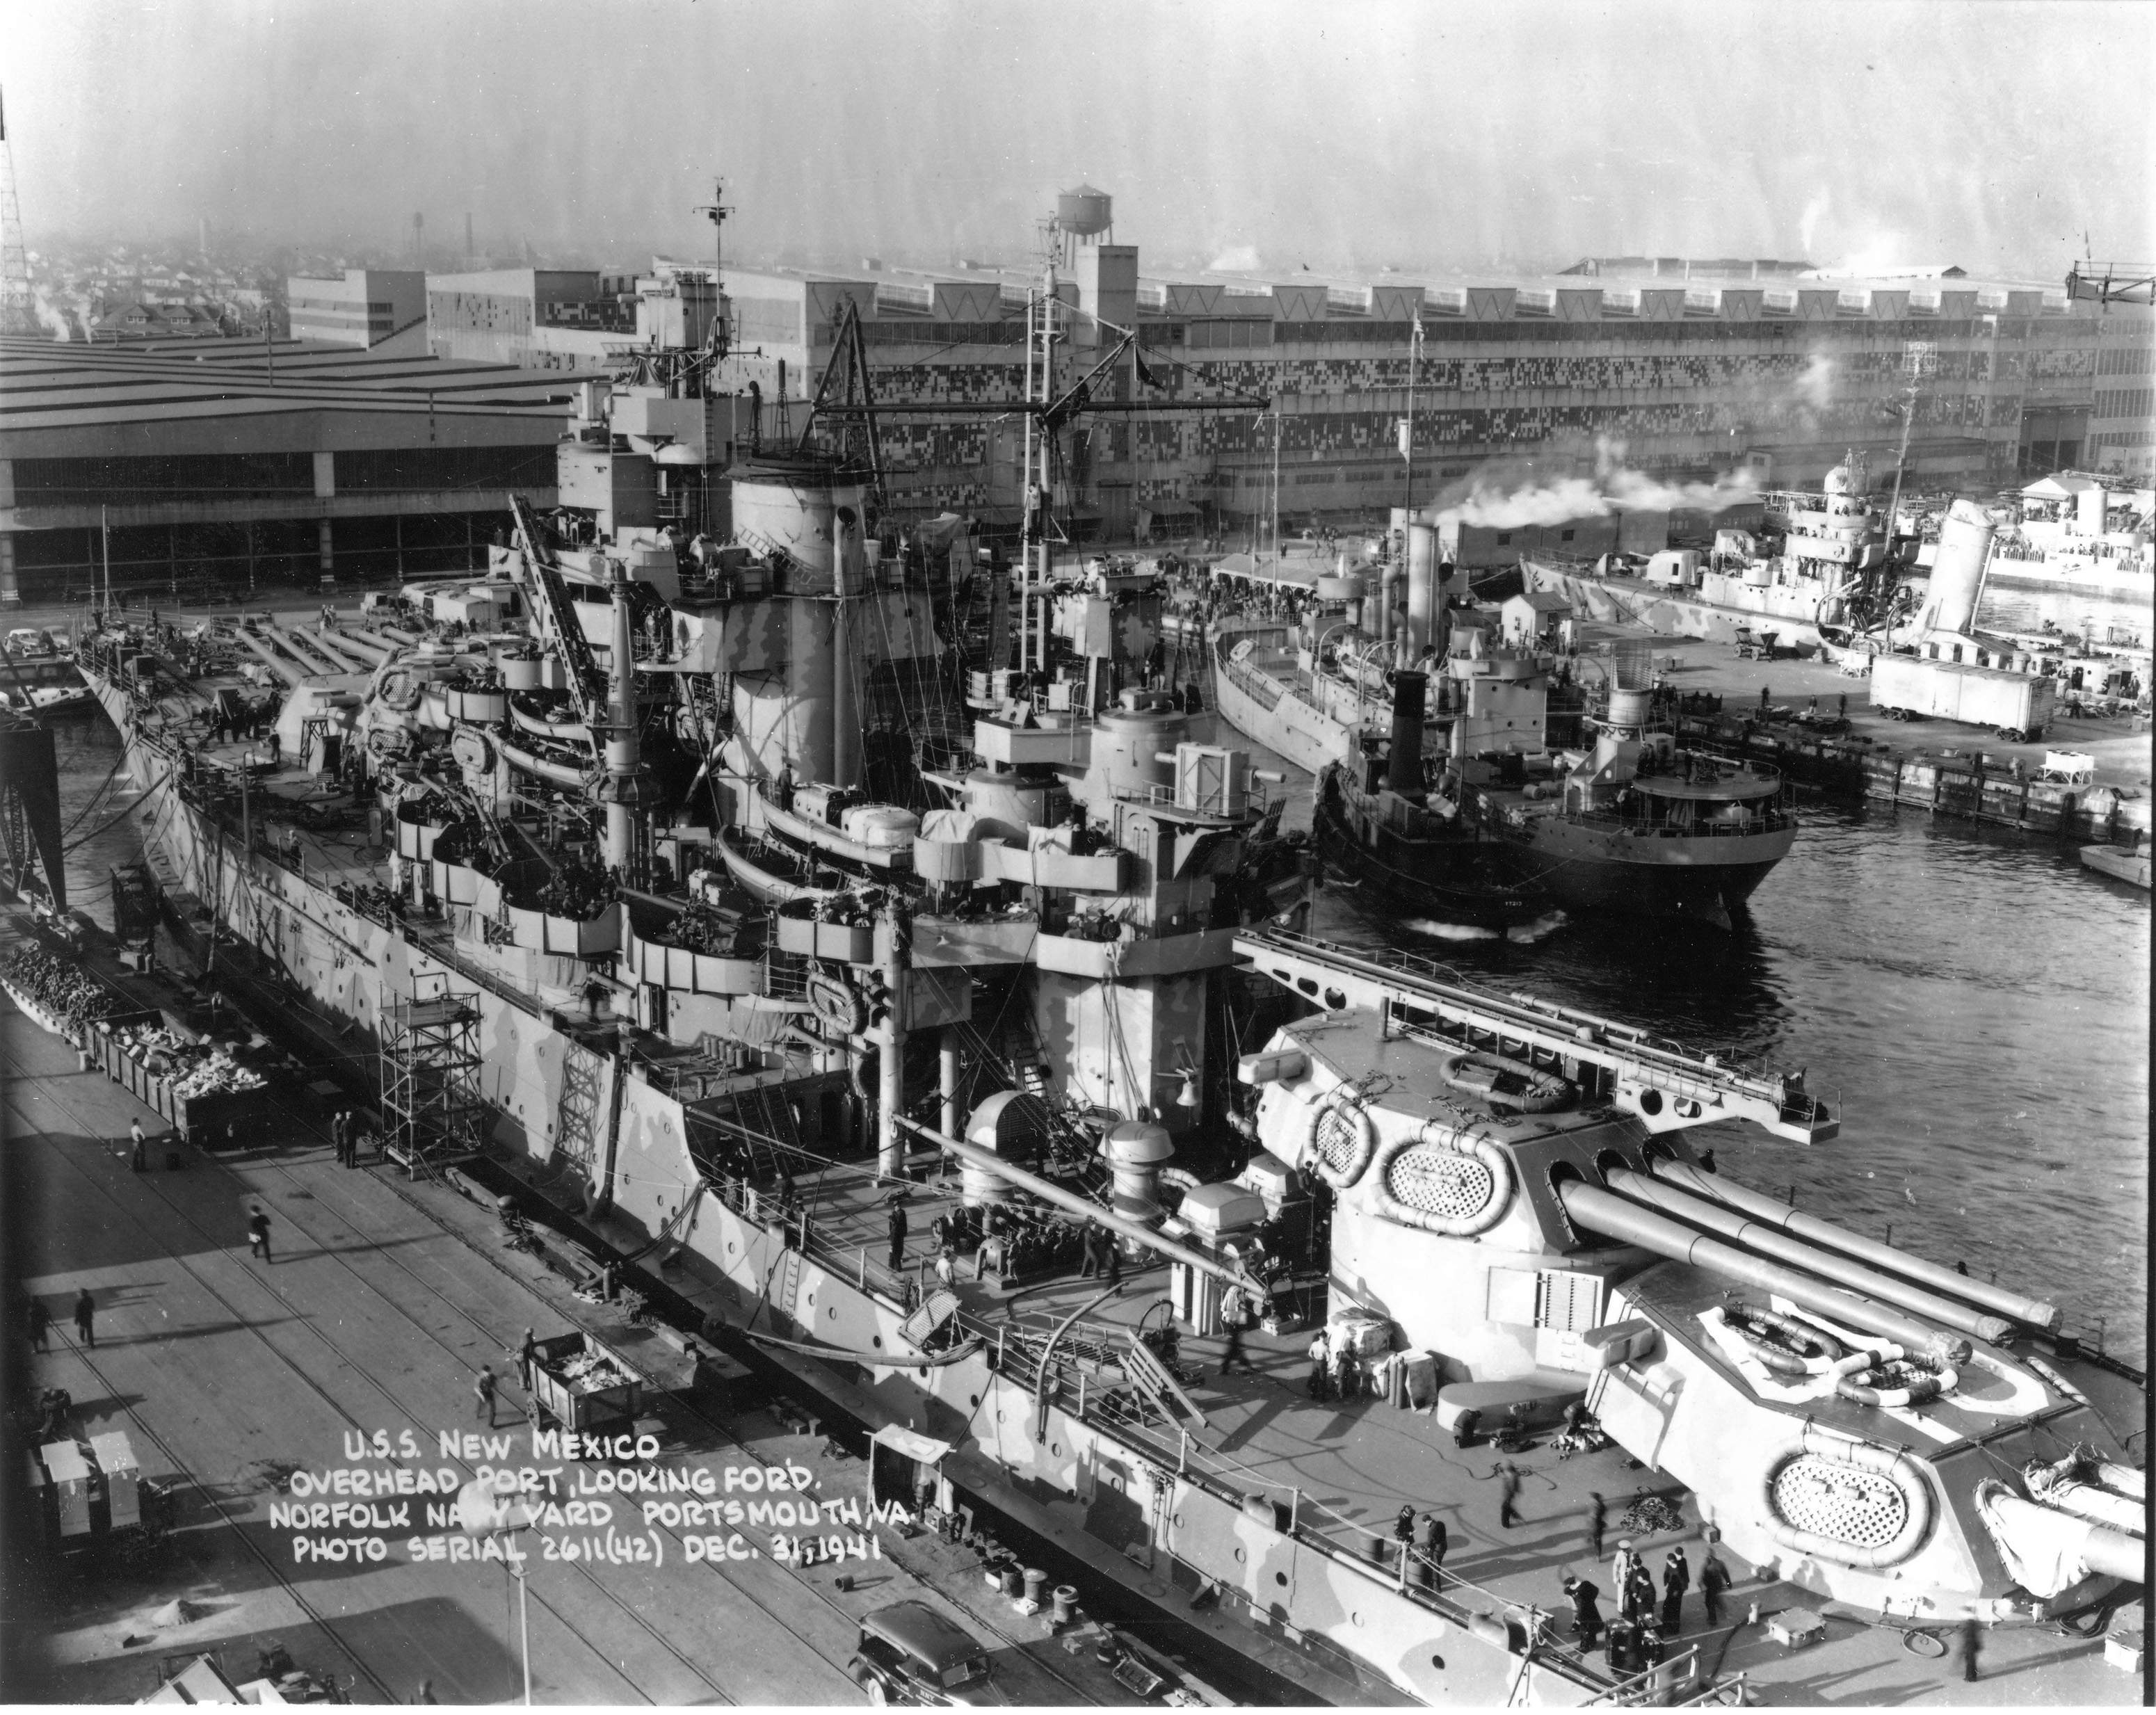 USS New Mexico, Norfolk Navy Yard, Portsmouth, Virginia, United States, 31 Dec 1941, photo 1 of 5